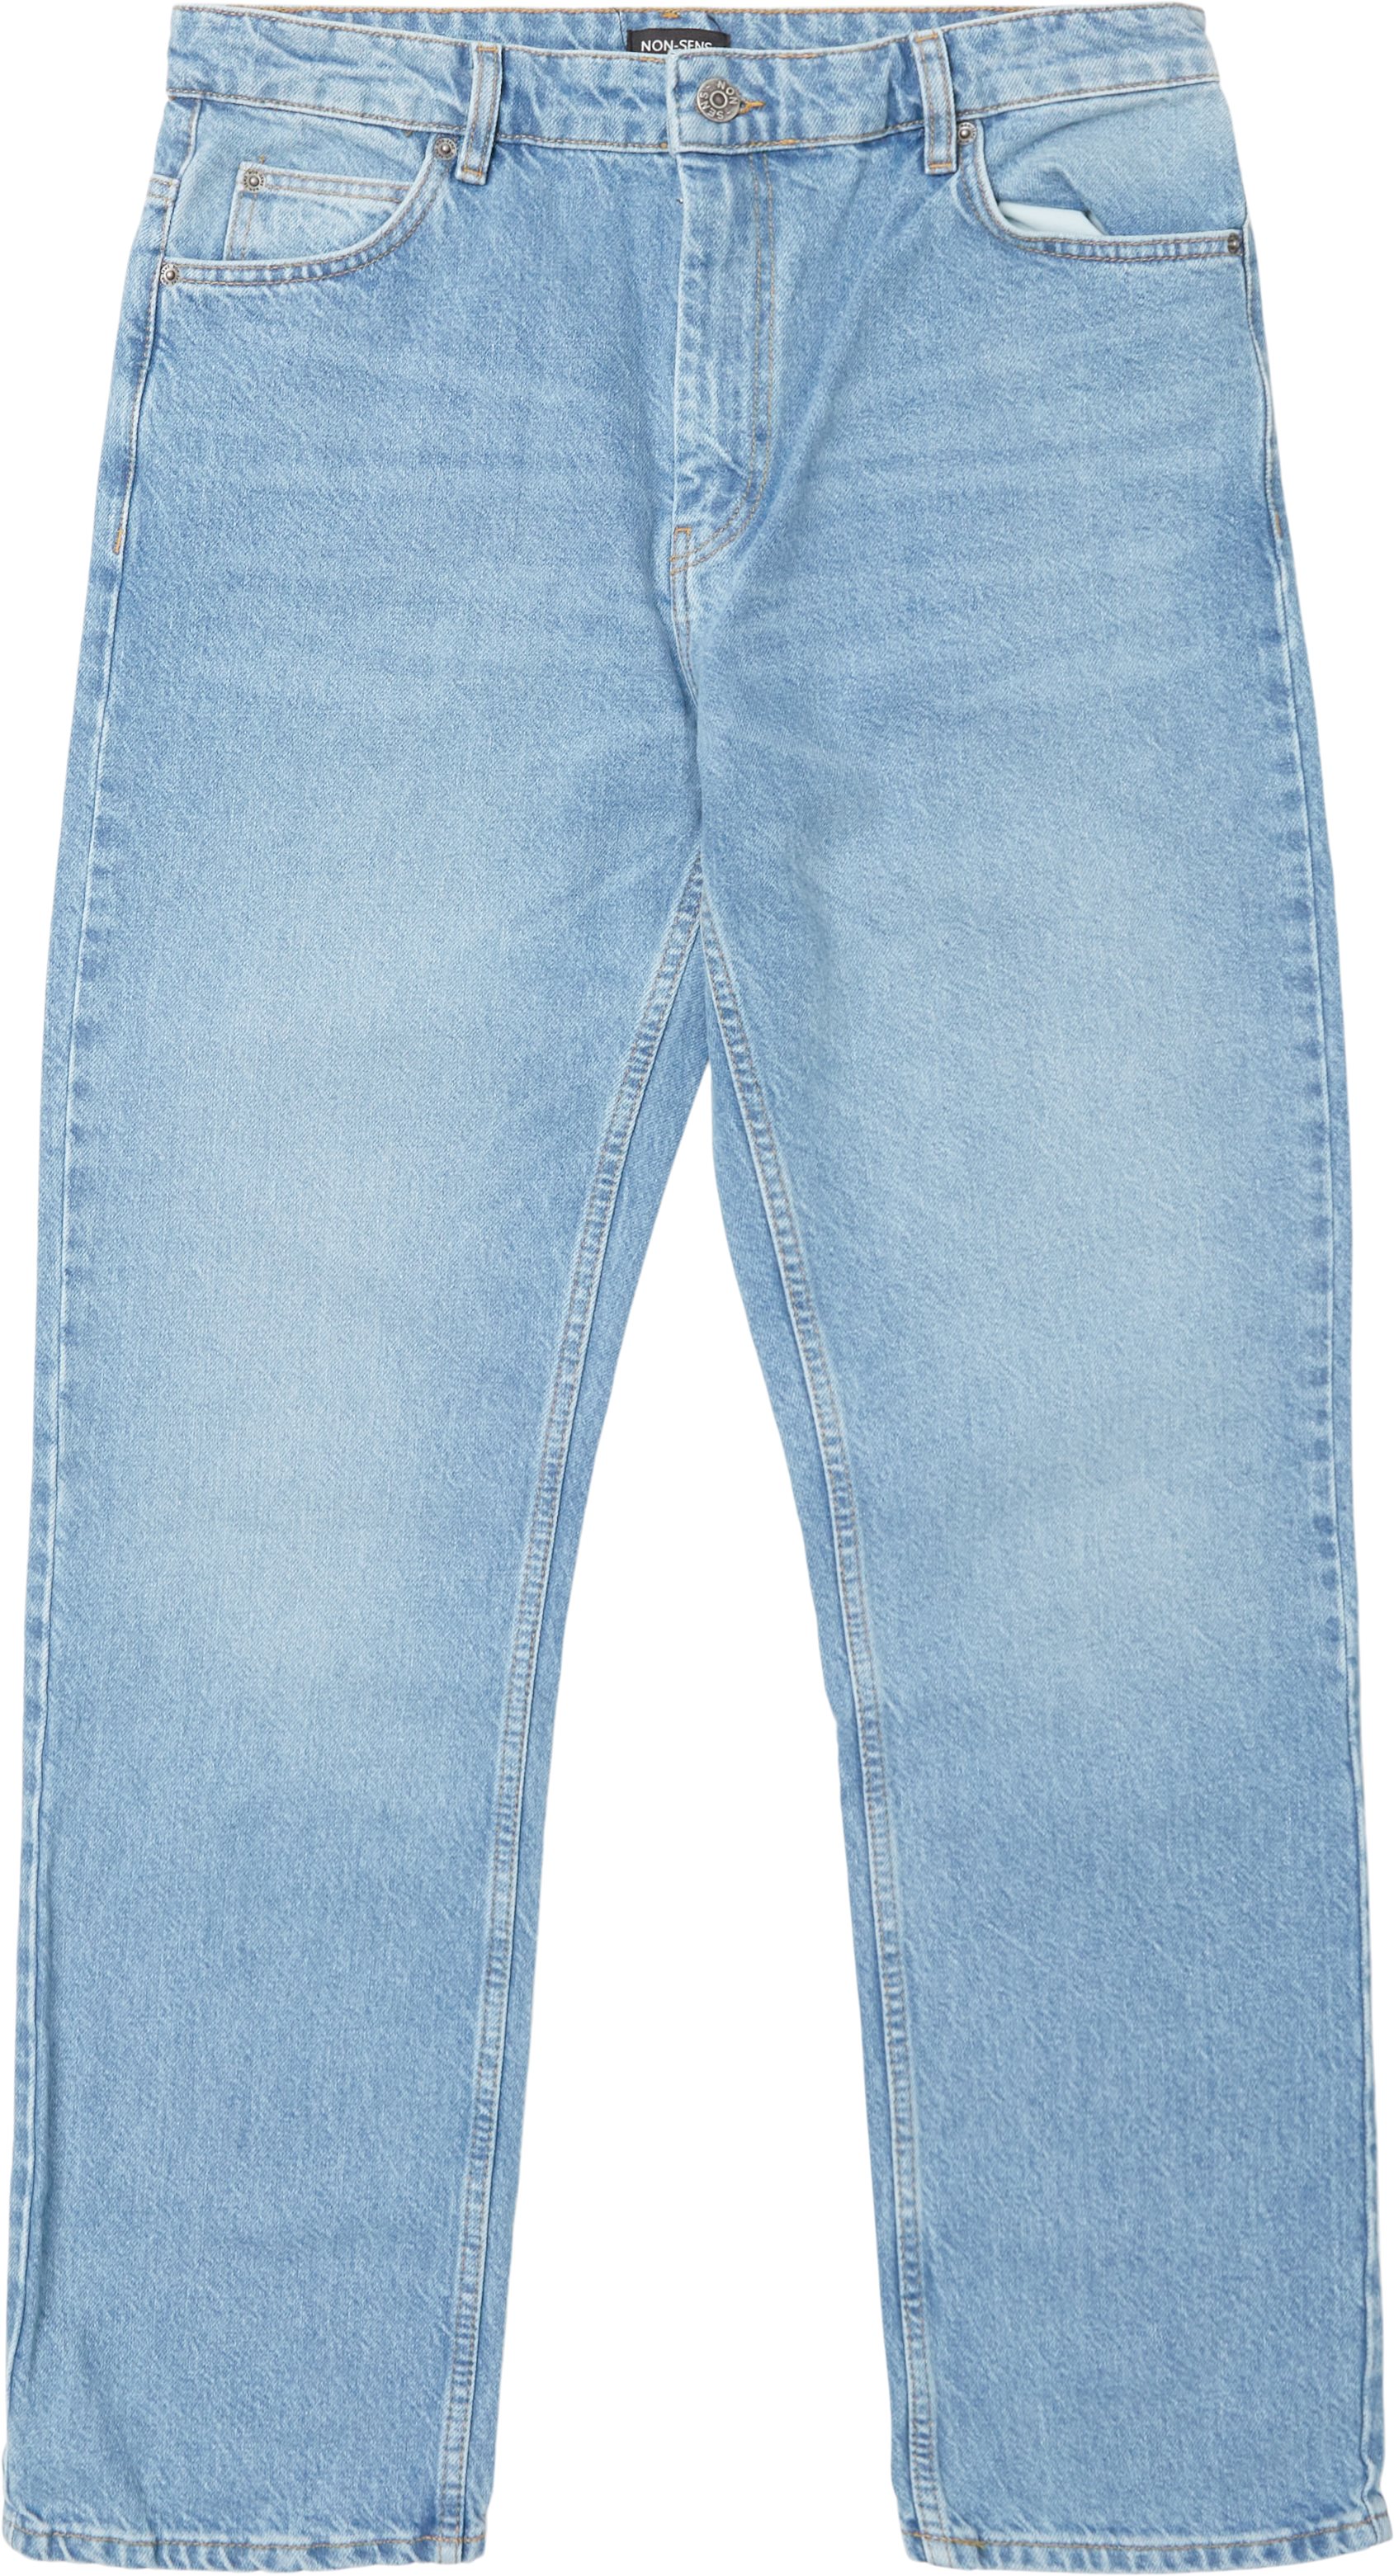 Vermont Jeans - Jeans - Straight fit - Denim